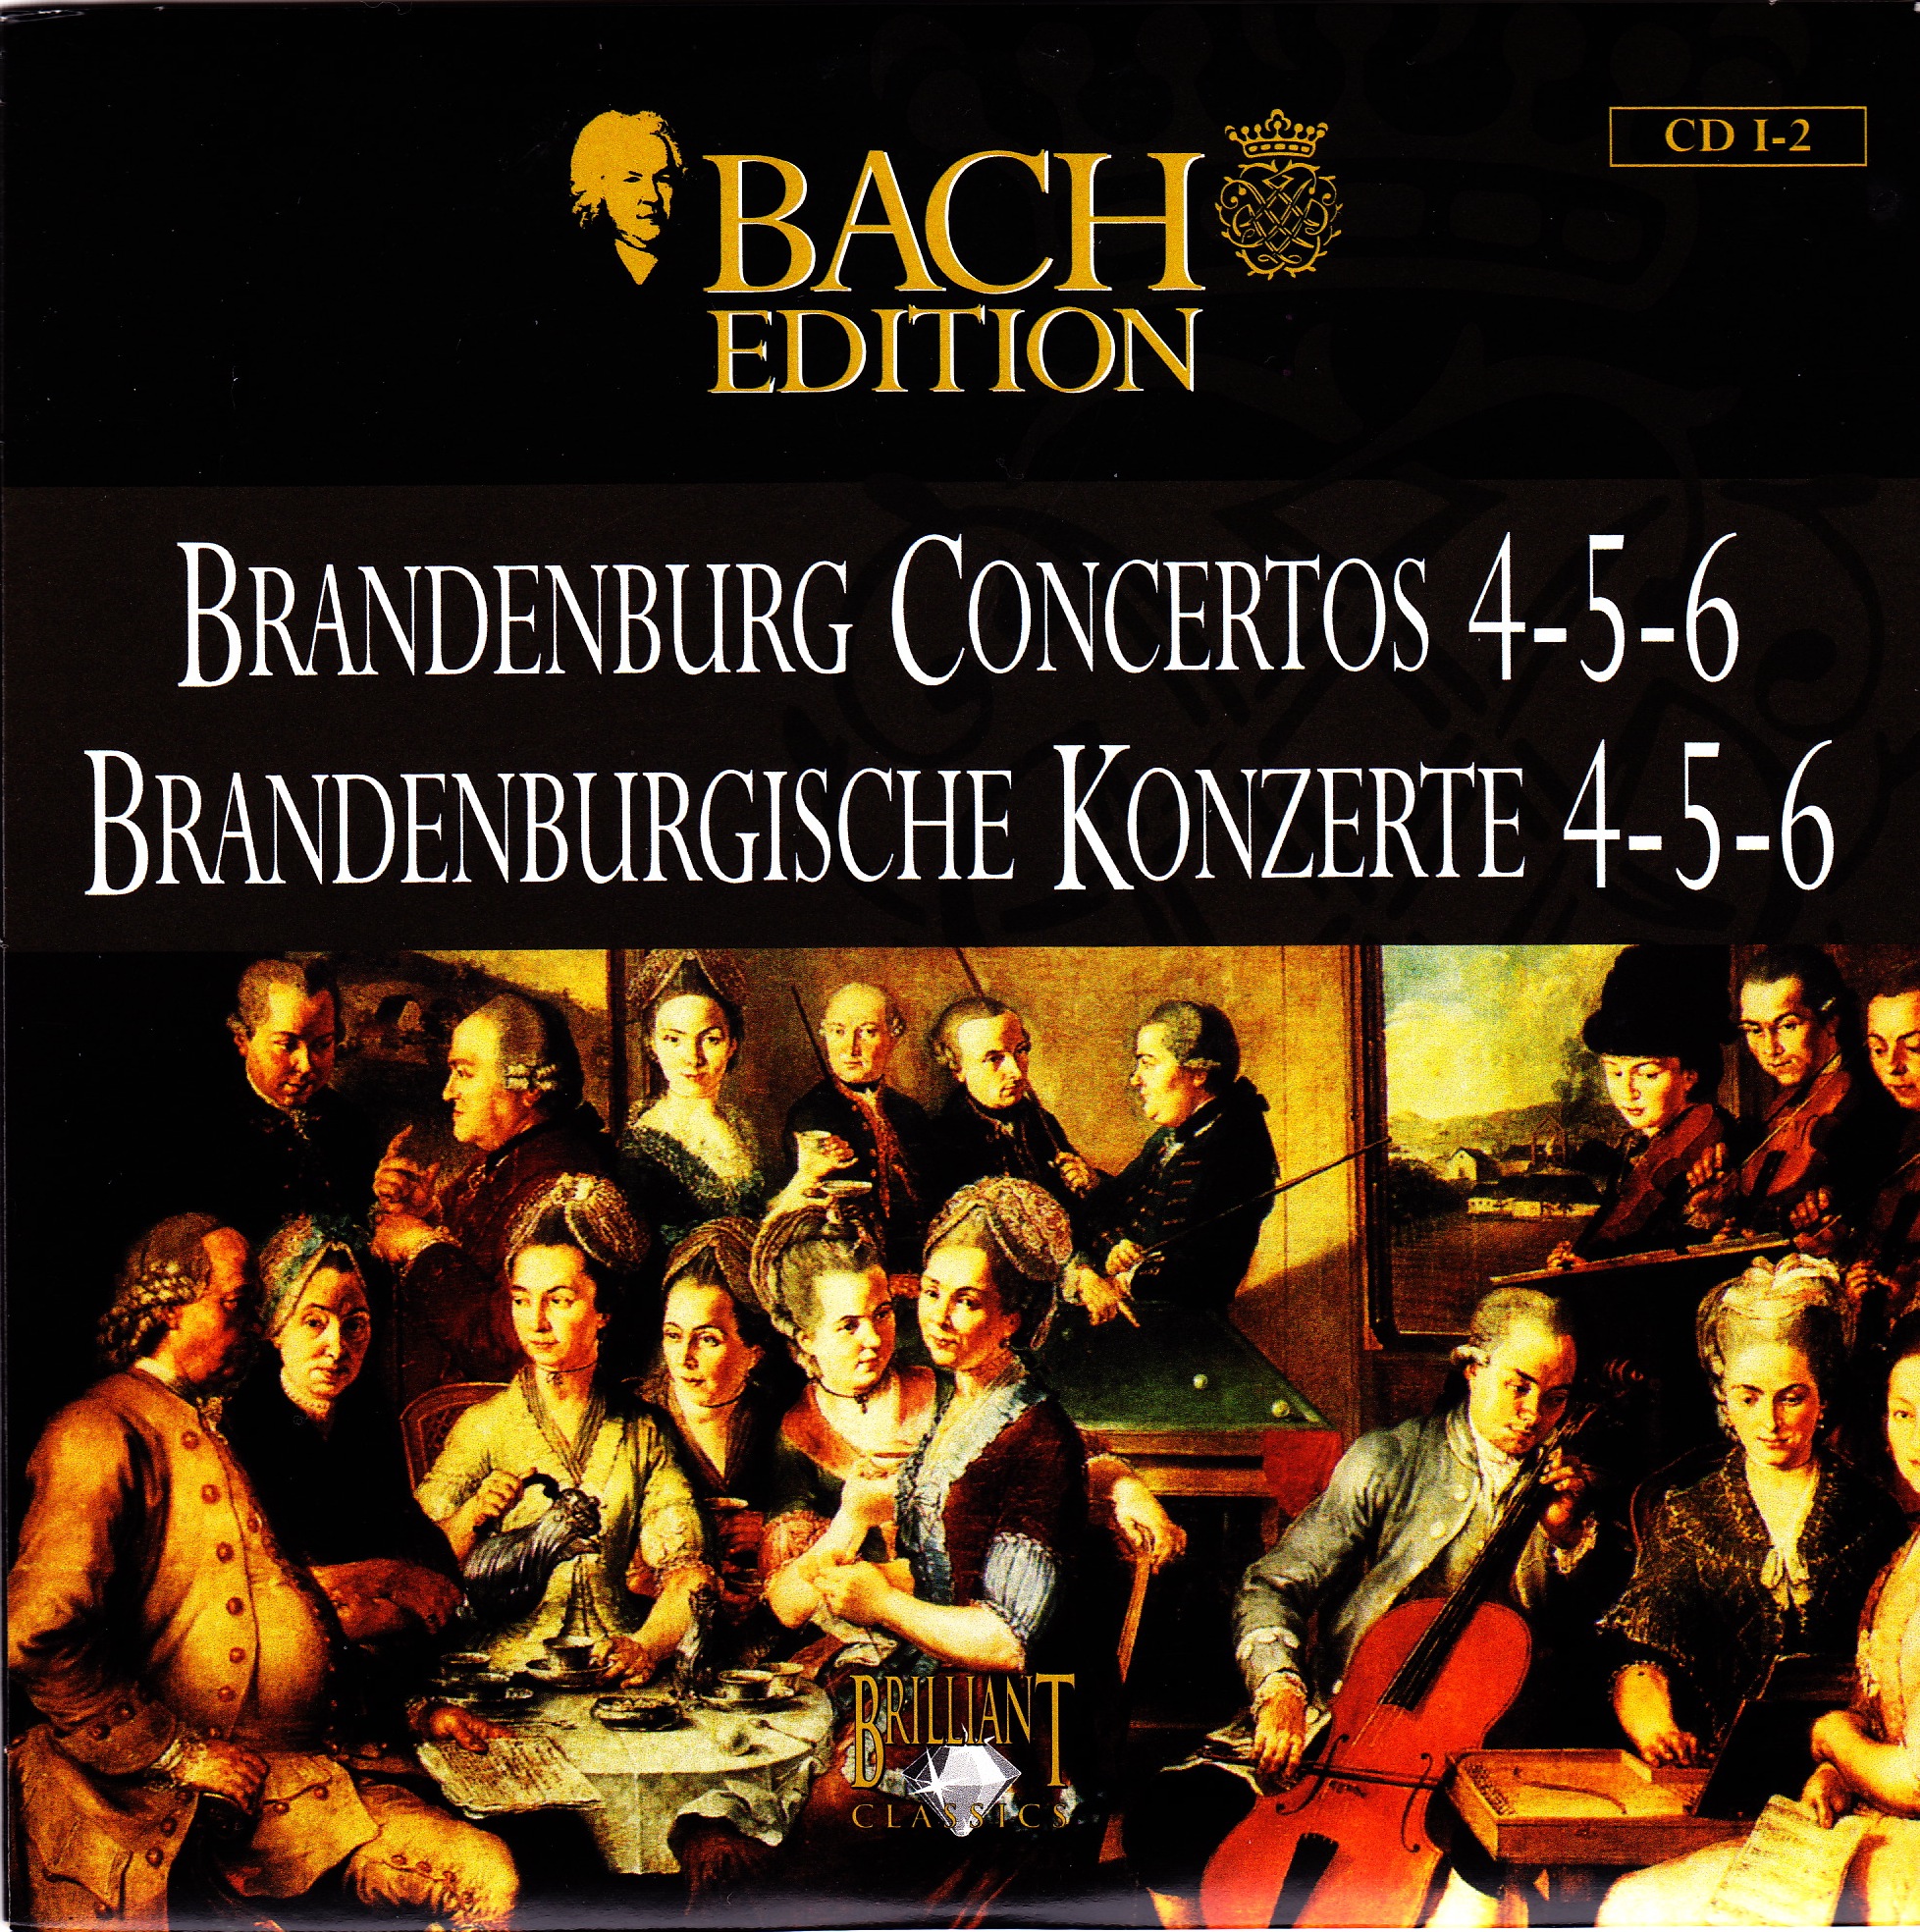 Bach Edition 2